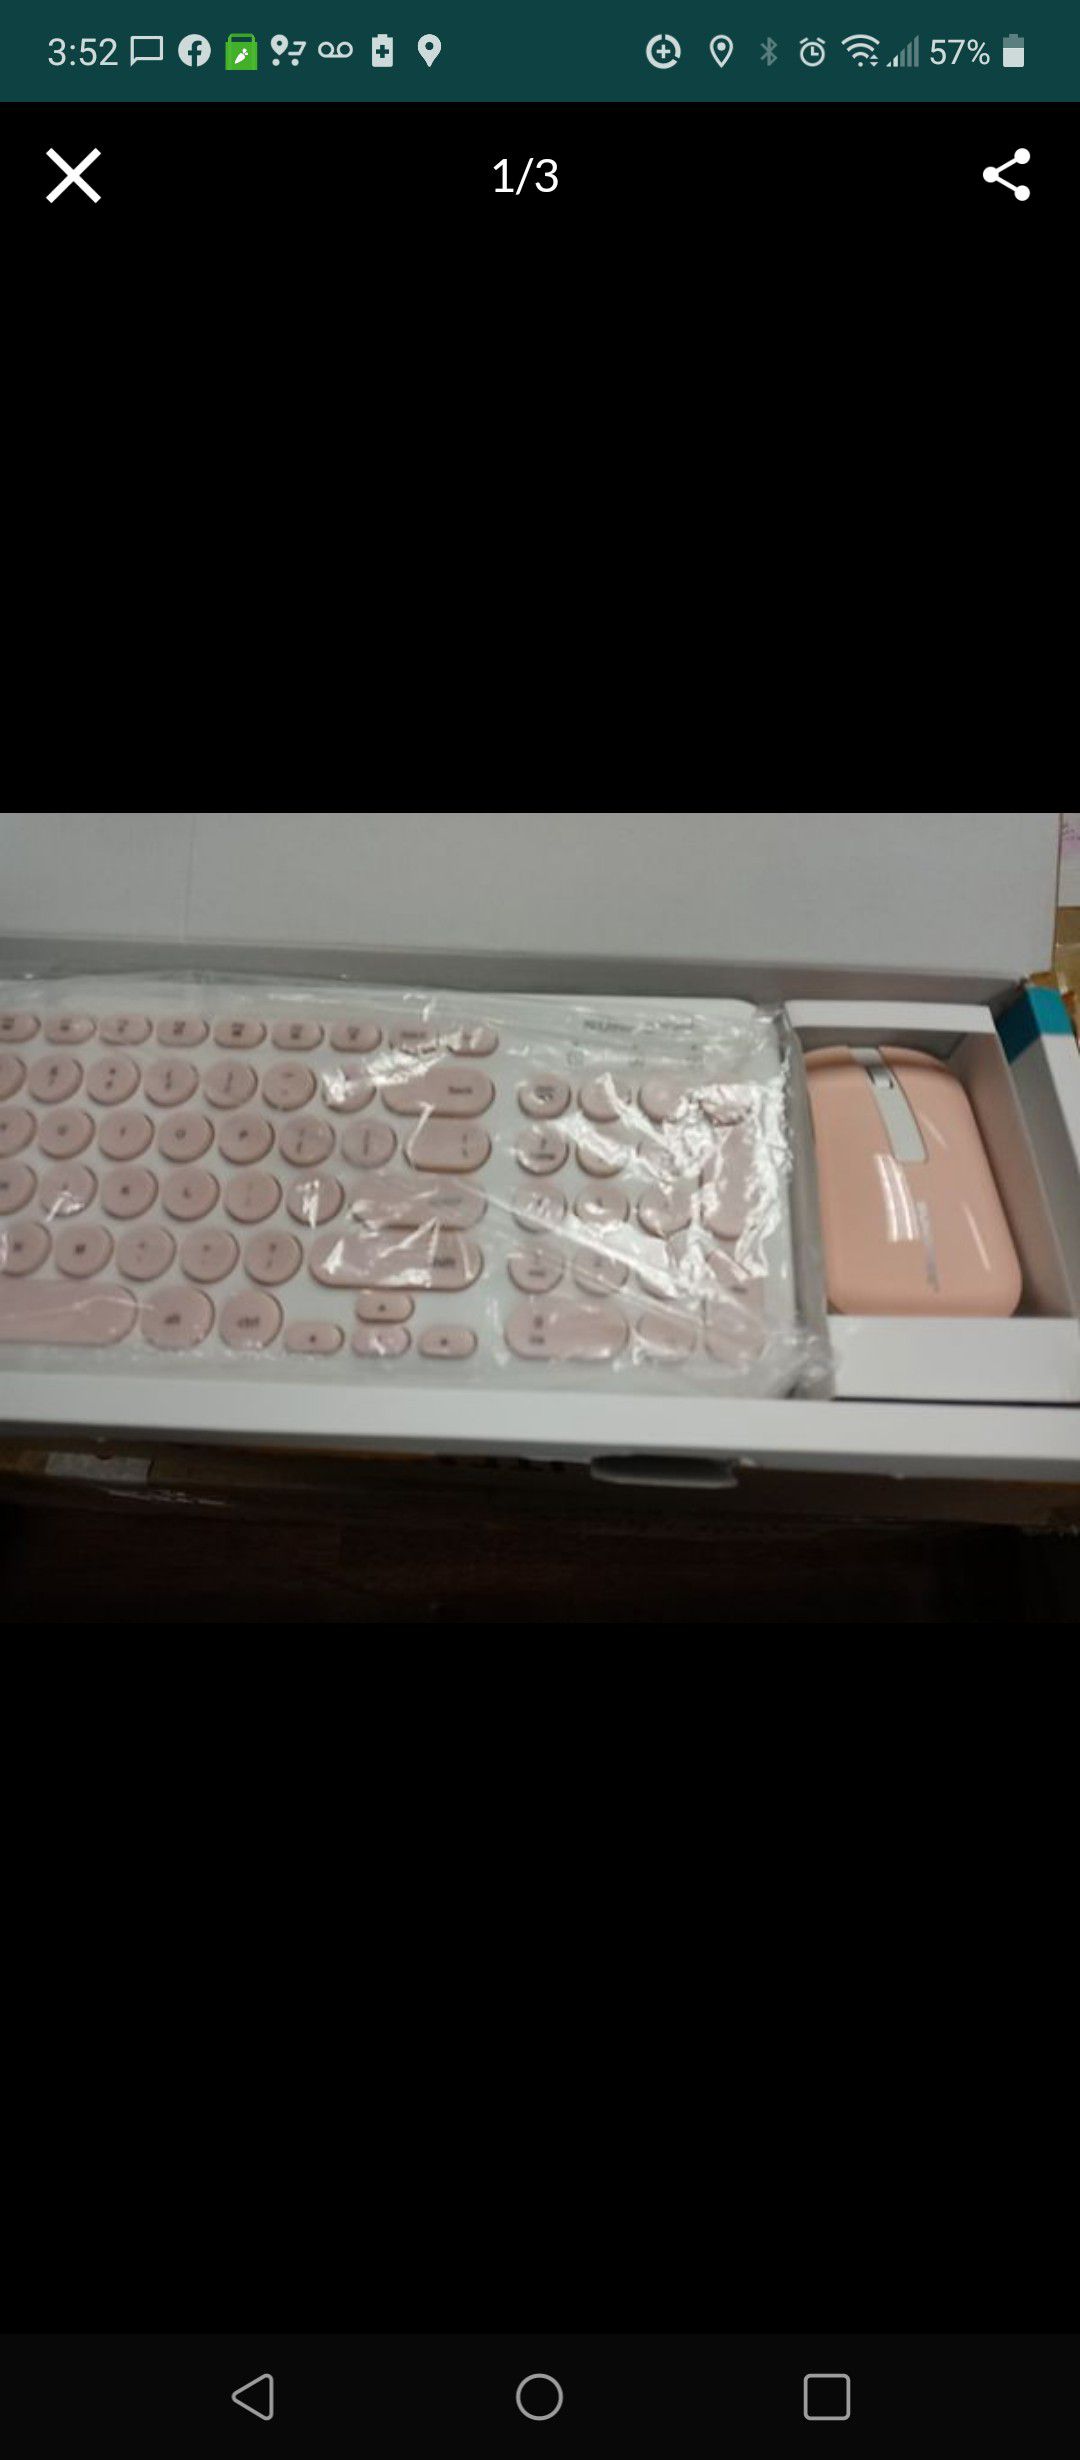 Sunrose wireless keyboard and mouse. Pink